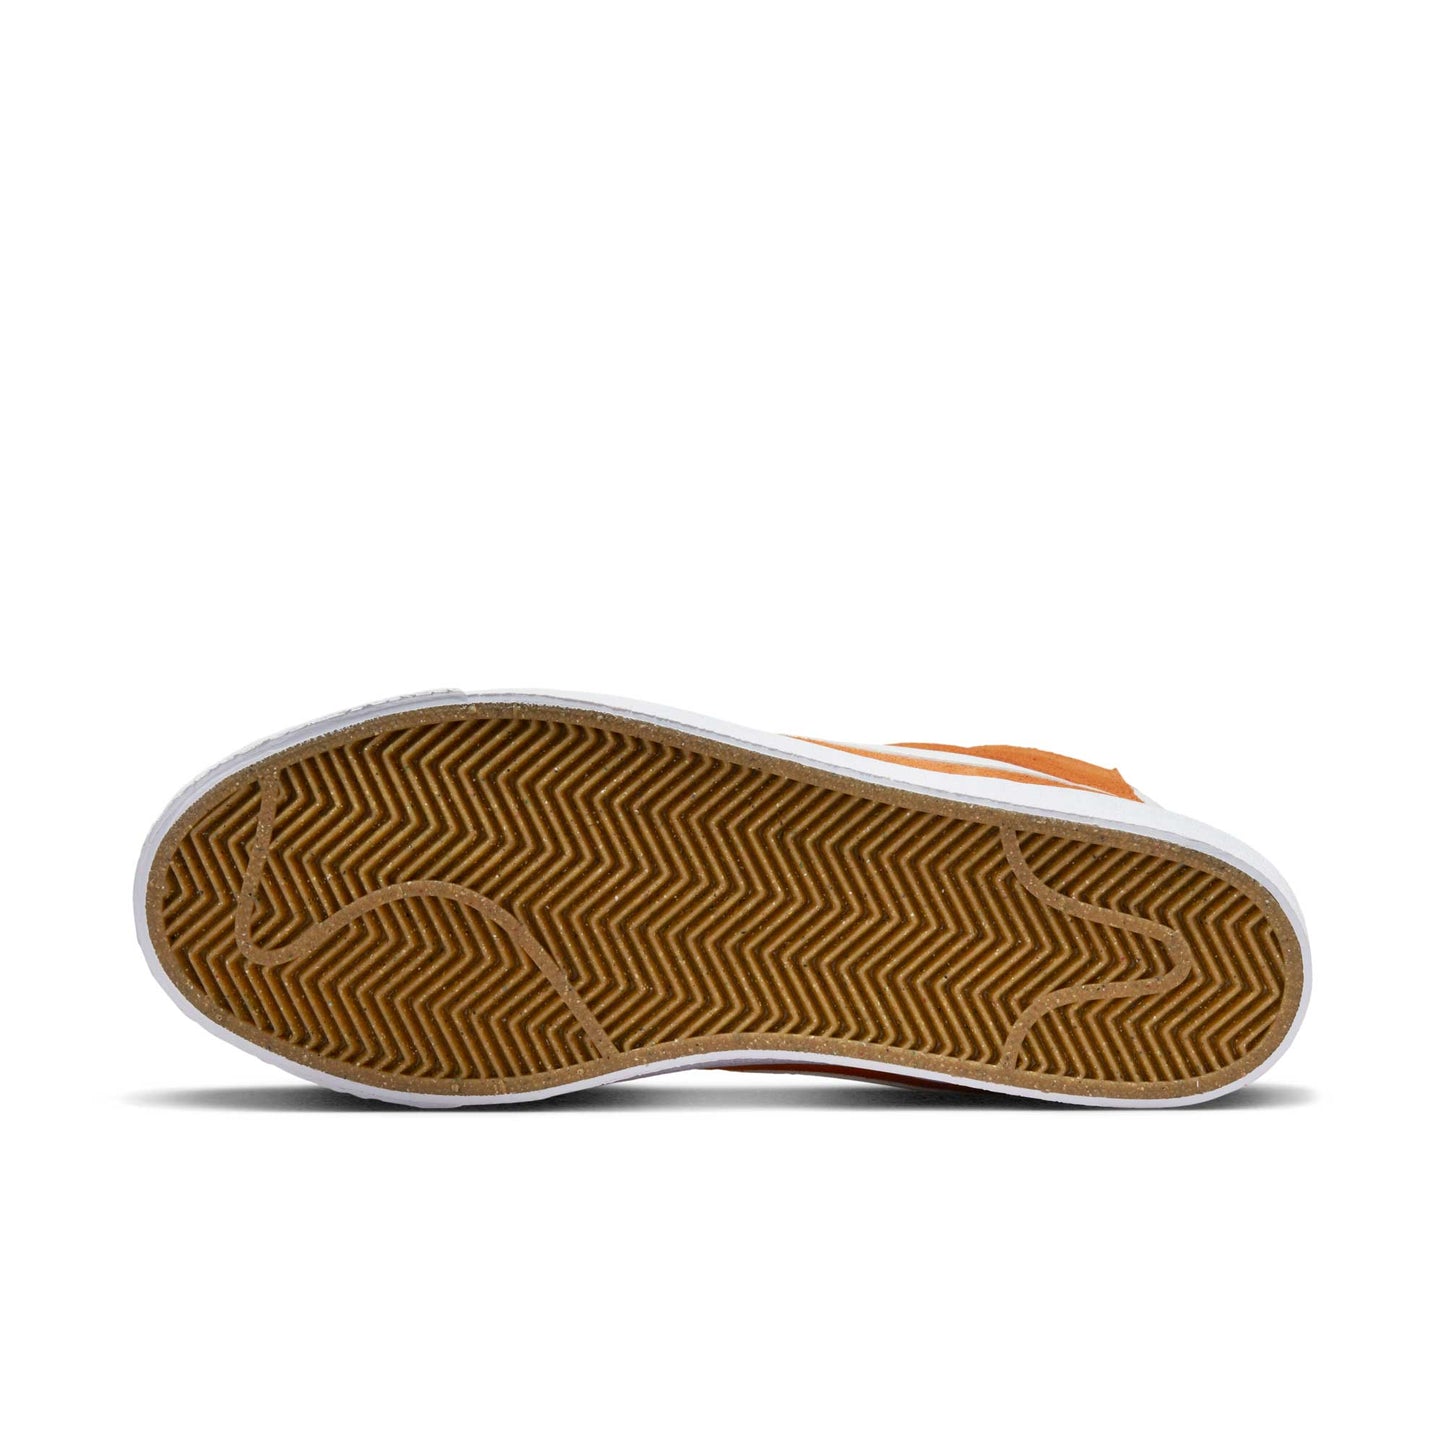 Nike SB Zoom Blazer Mid, safety orange/white-safety orange-white - Tiki Room Skateboards - 10